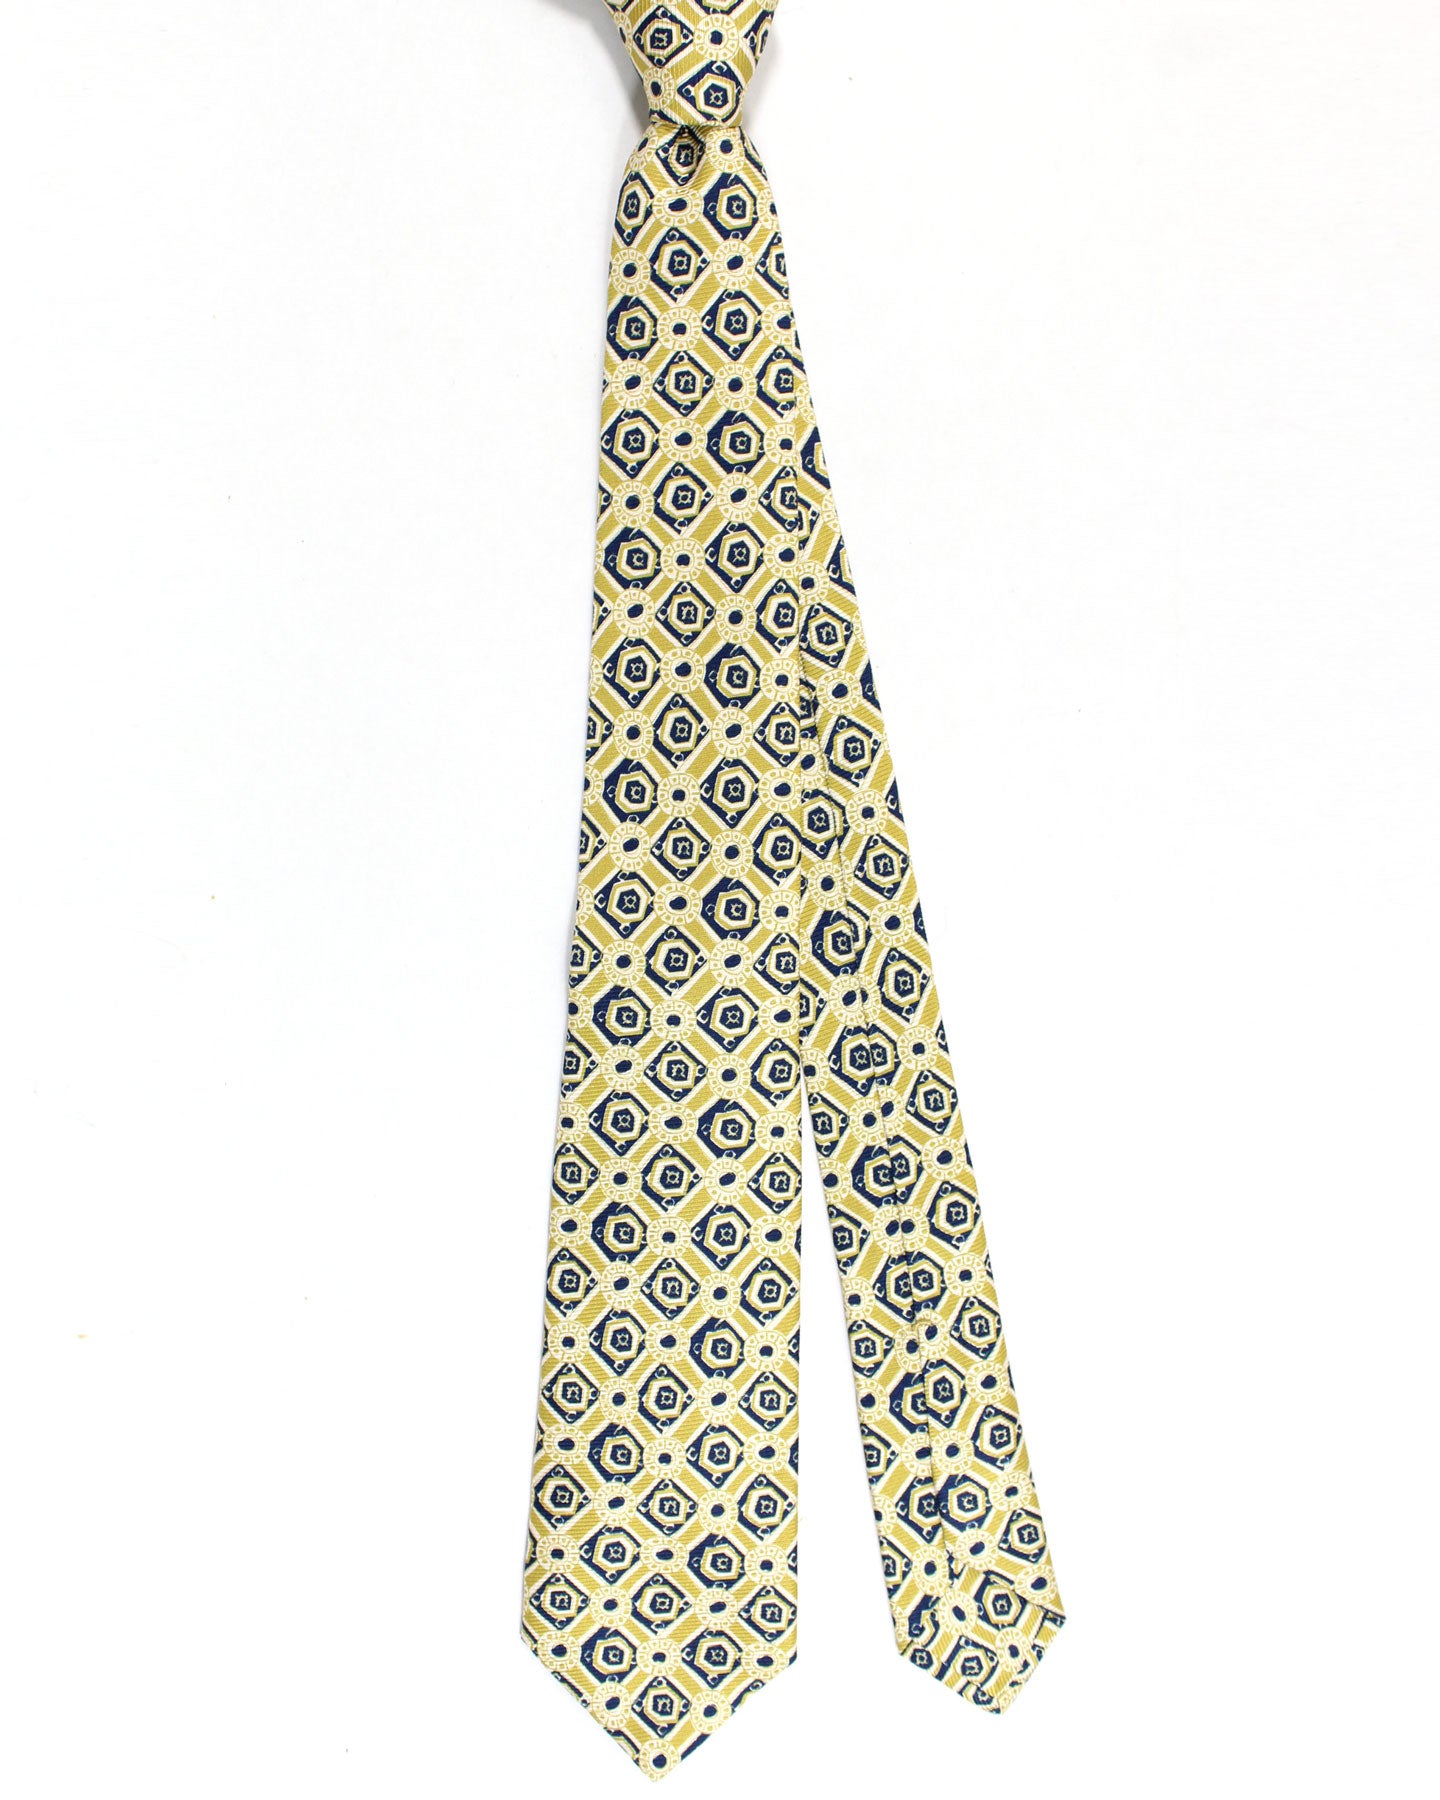 Sartorio Sevenfold Tie Chartreuse Navy Medallions Design